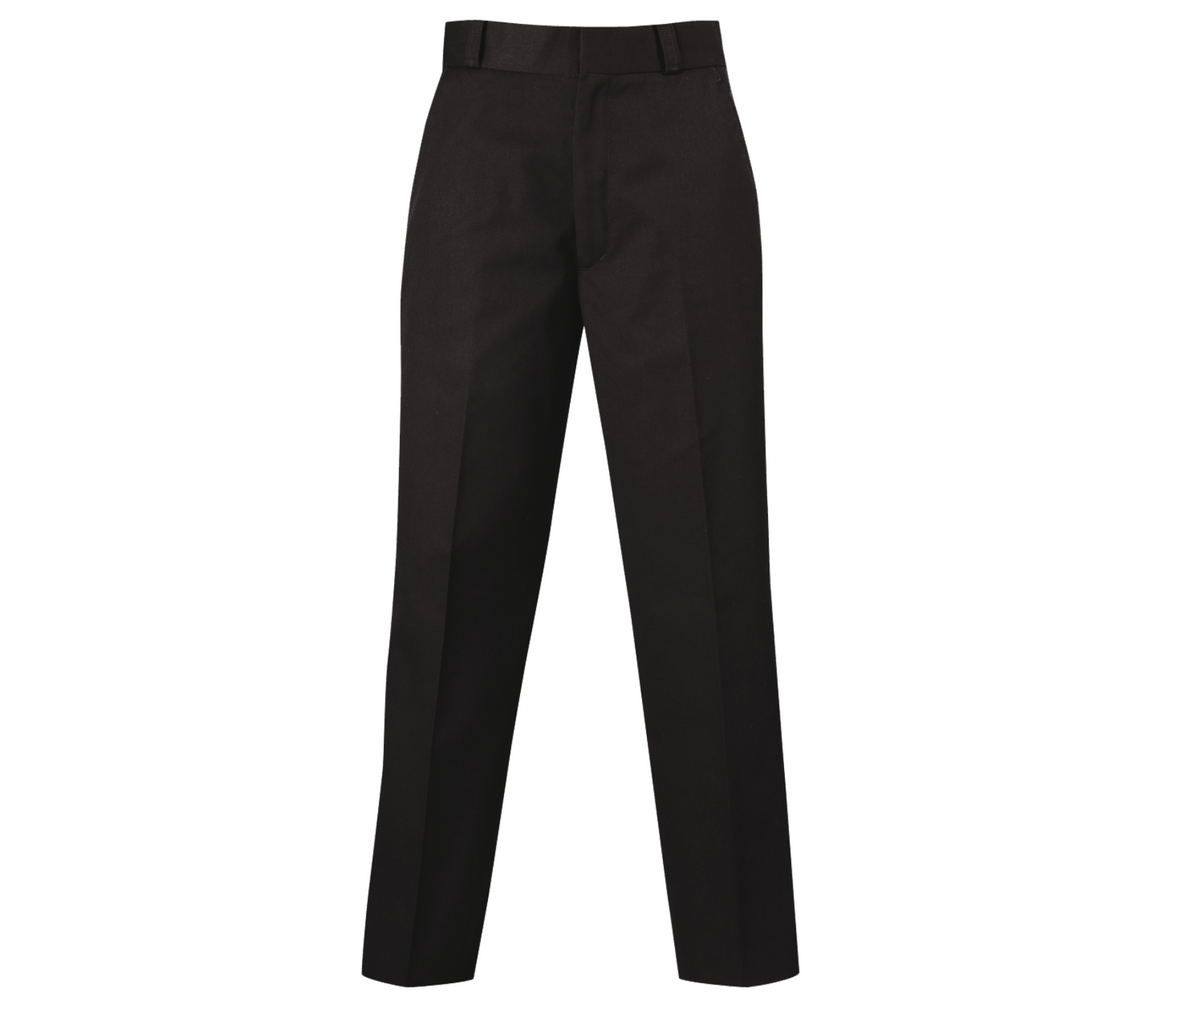 Sports Long Pants LP05/06 Series (Unisex) - YOS Uniform & Premium Sdn. Bhd.